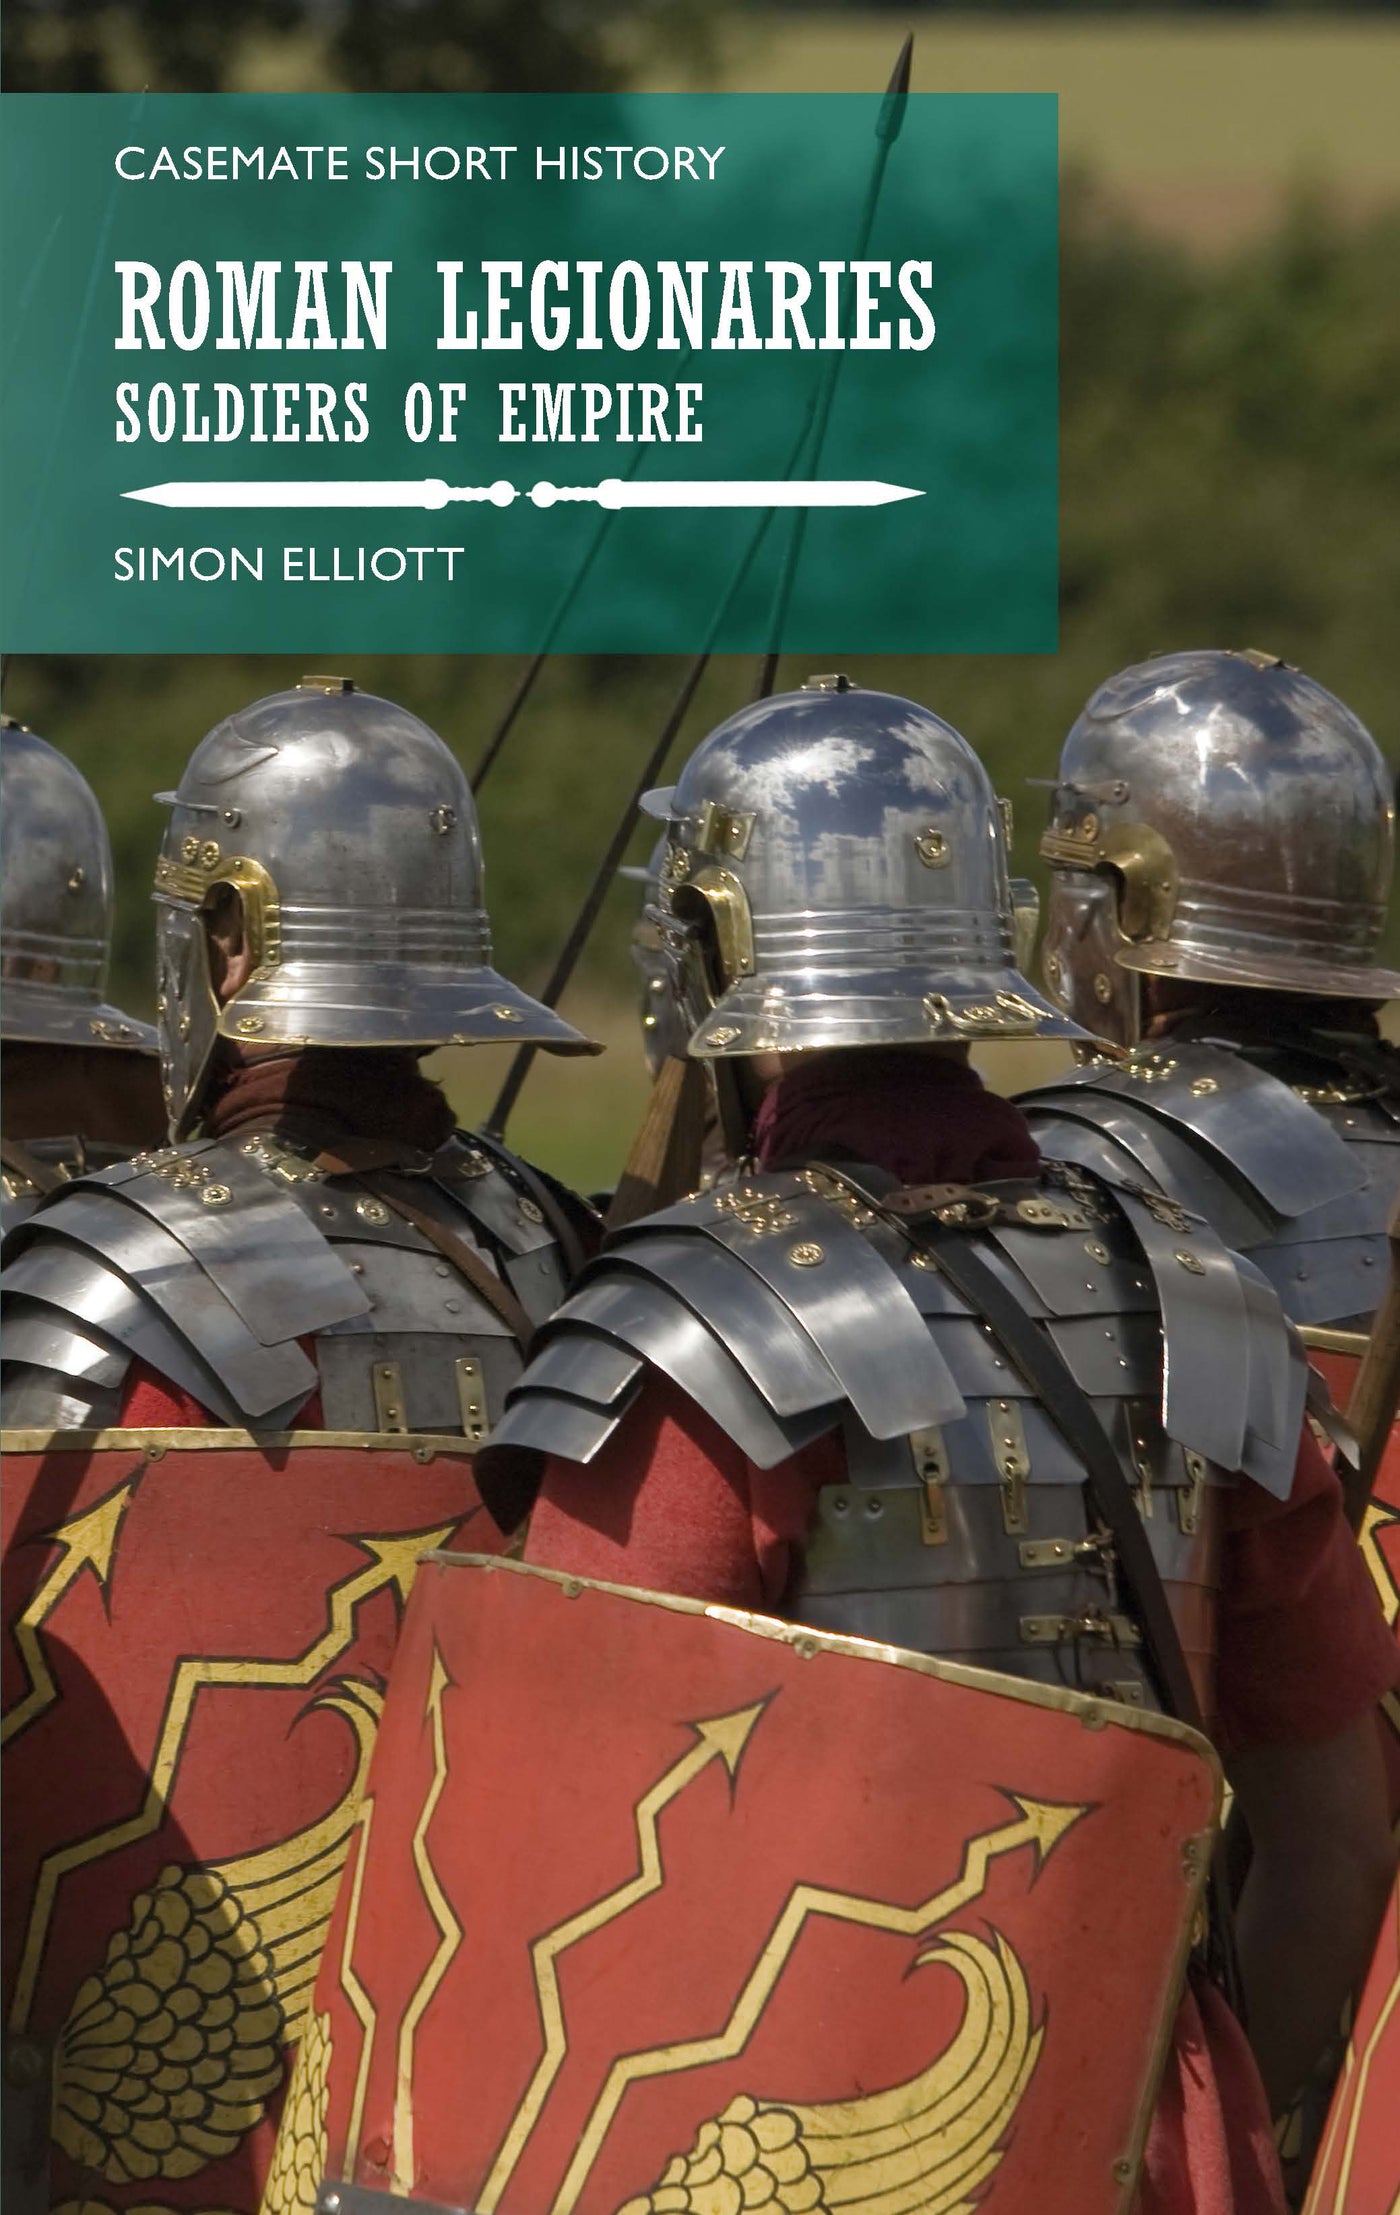 The Roman Legionaries